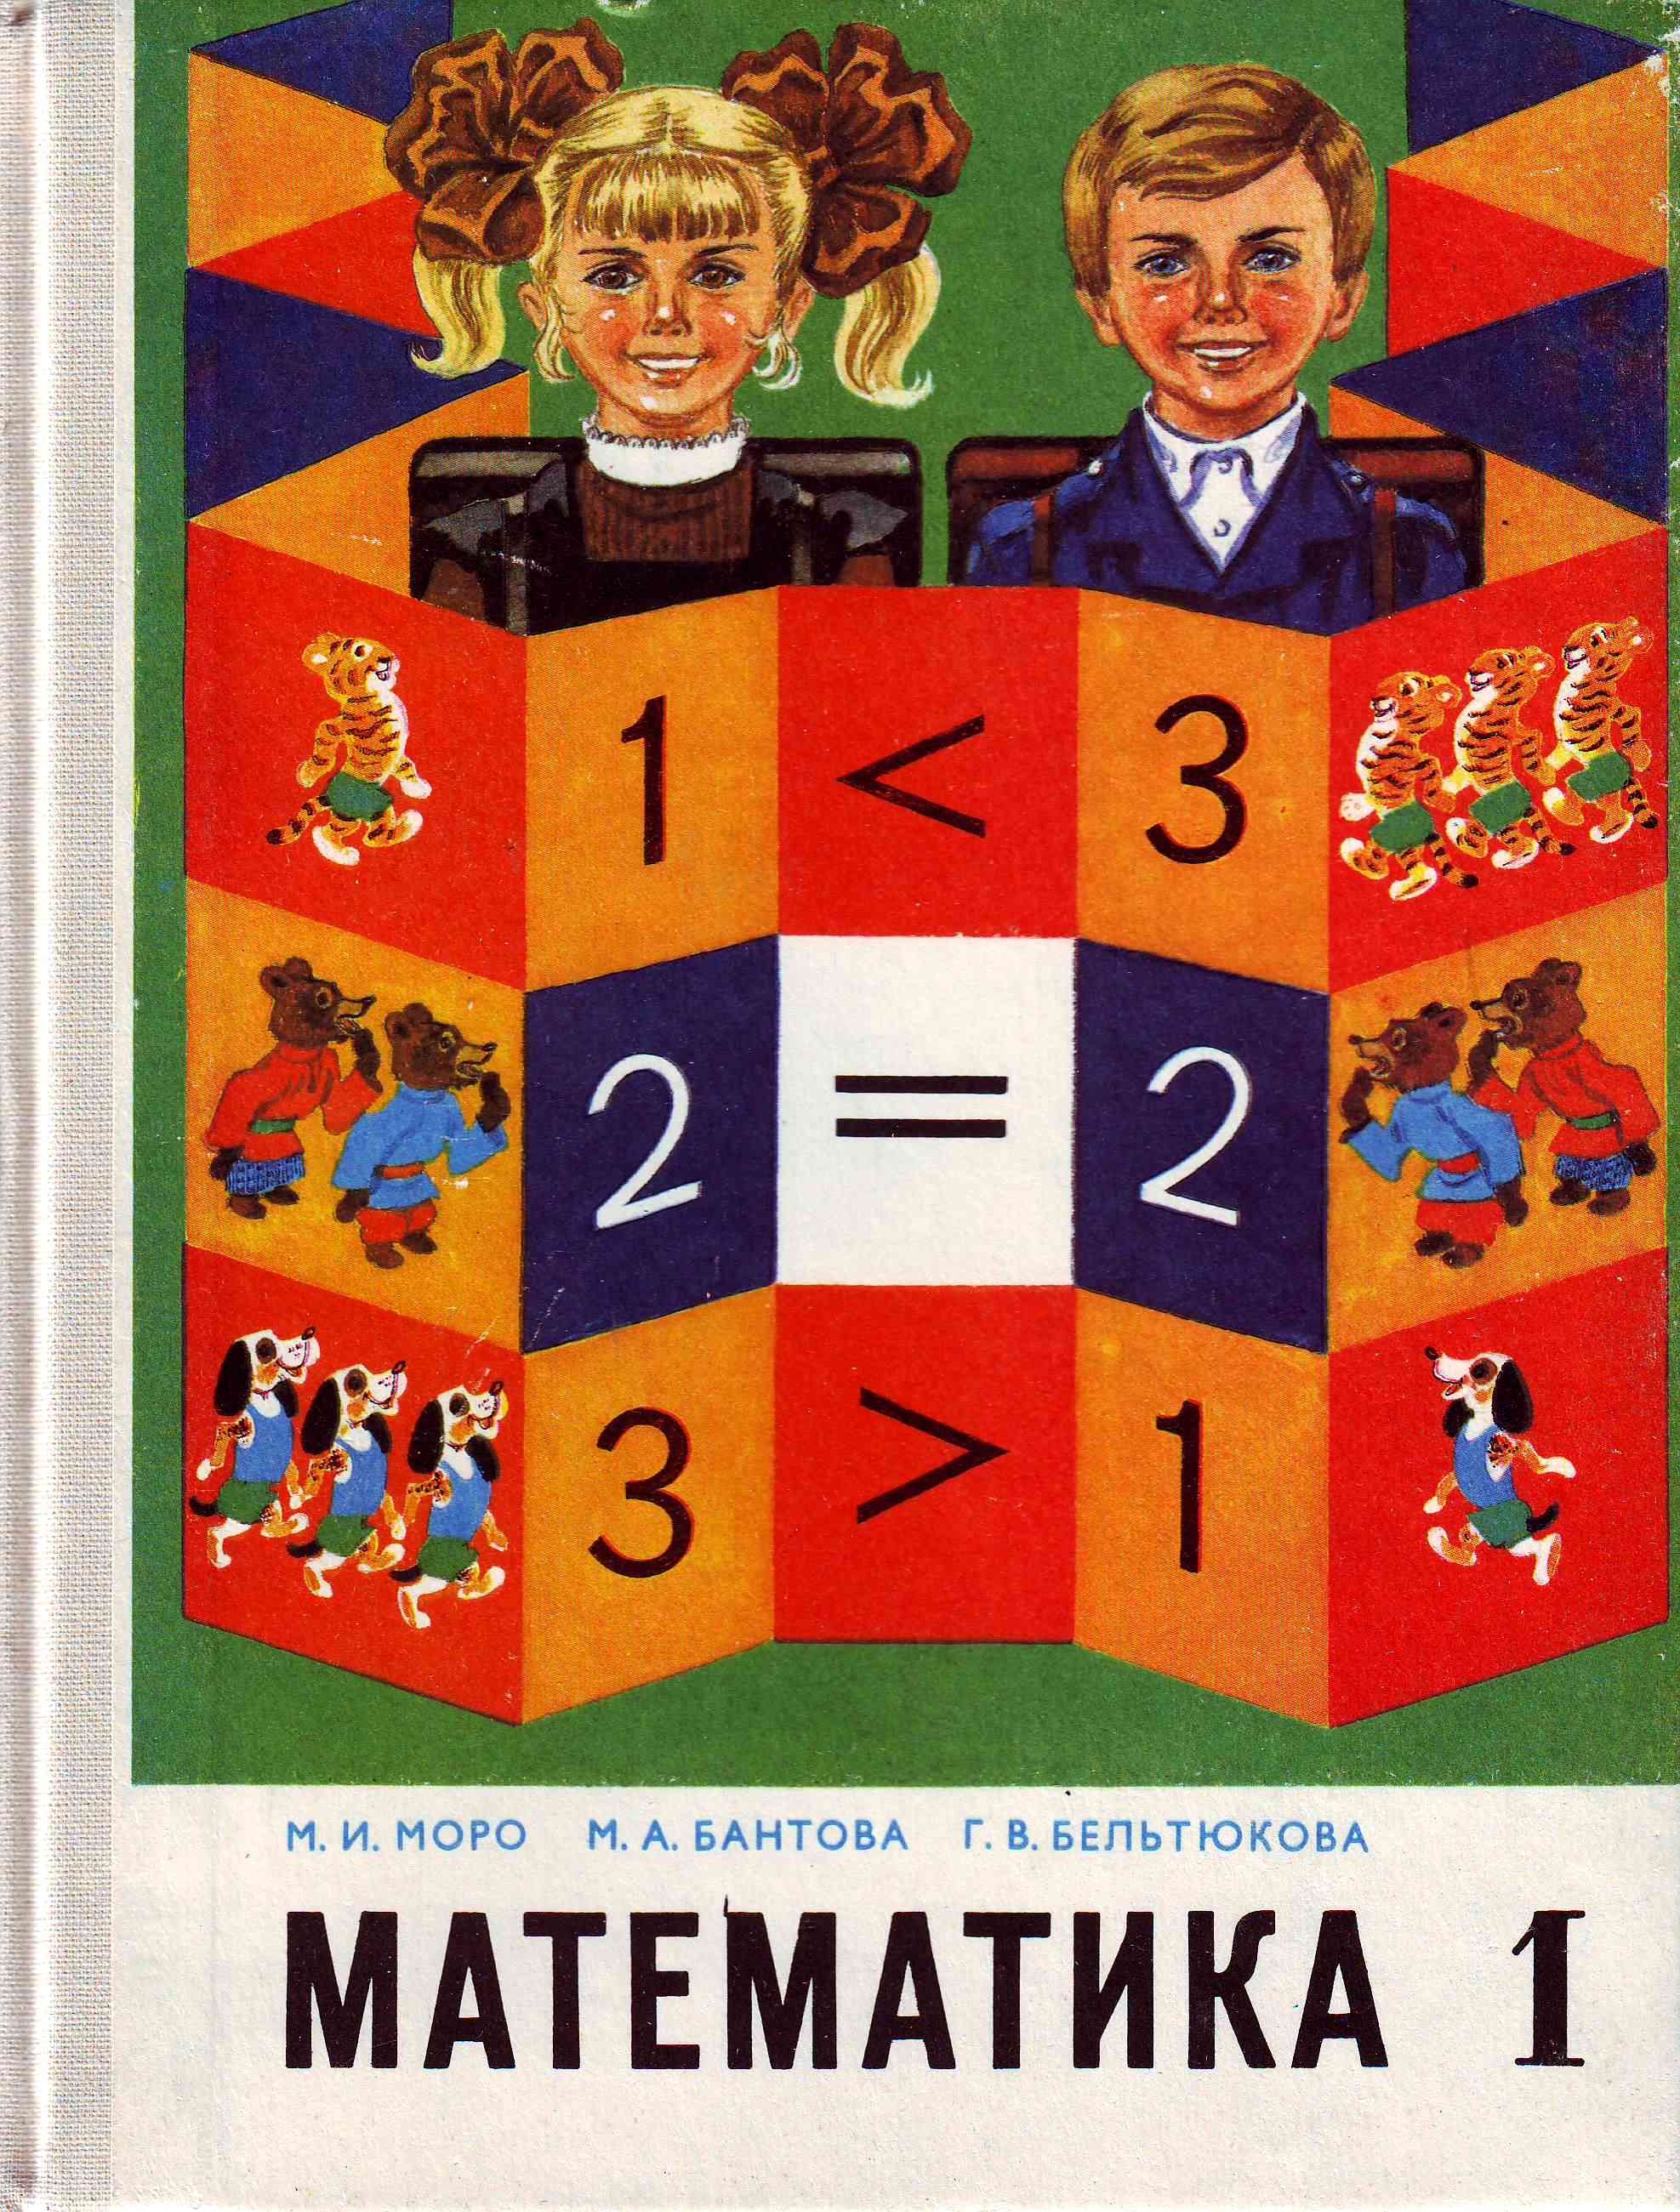 1996 год математика. Математика 1 Советский учебник Моро. Советские книги по математике. Старые учебники по математике. Советские учебники математики.